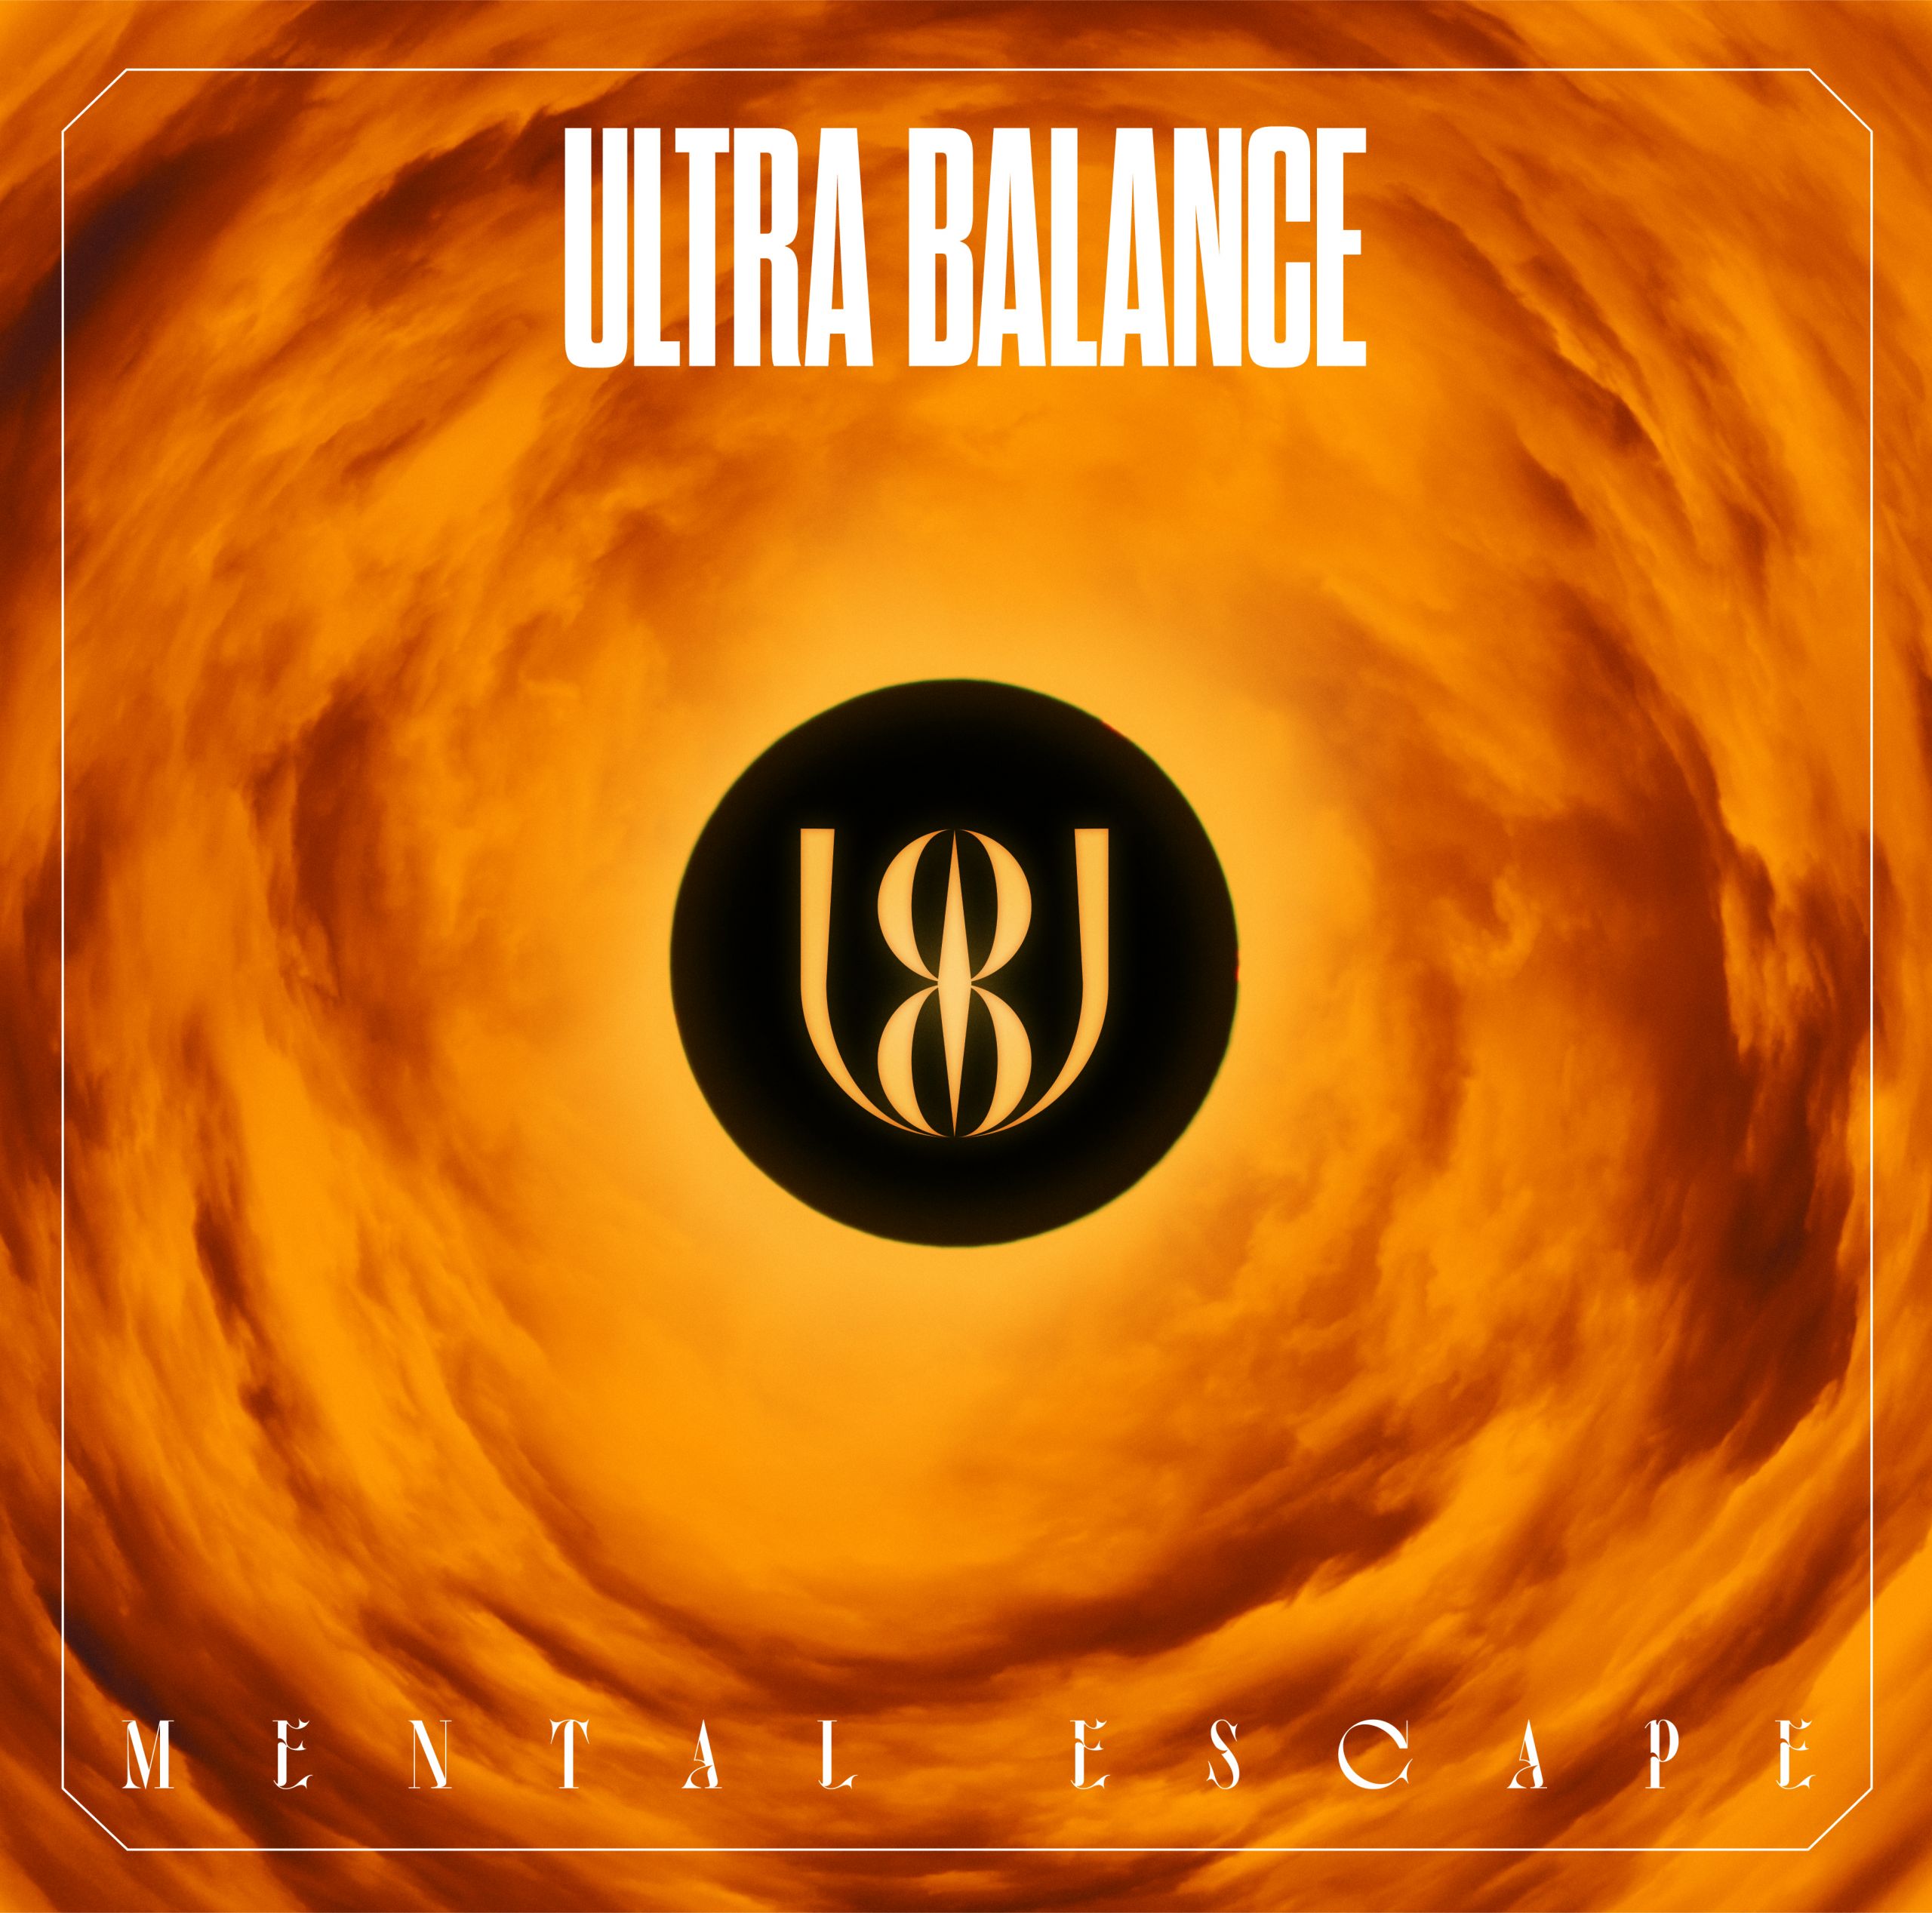 Ultra Balance – Mental Escape